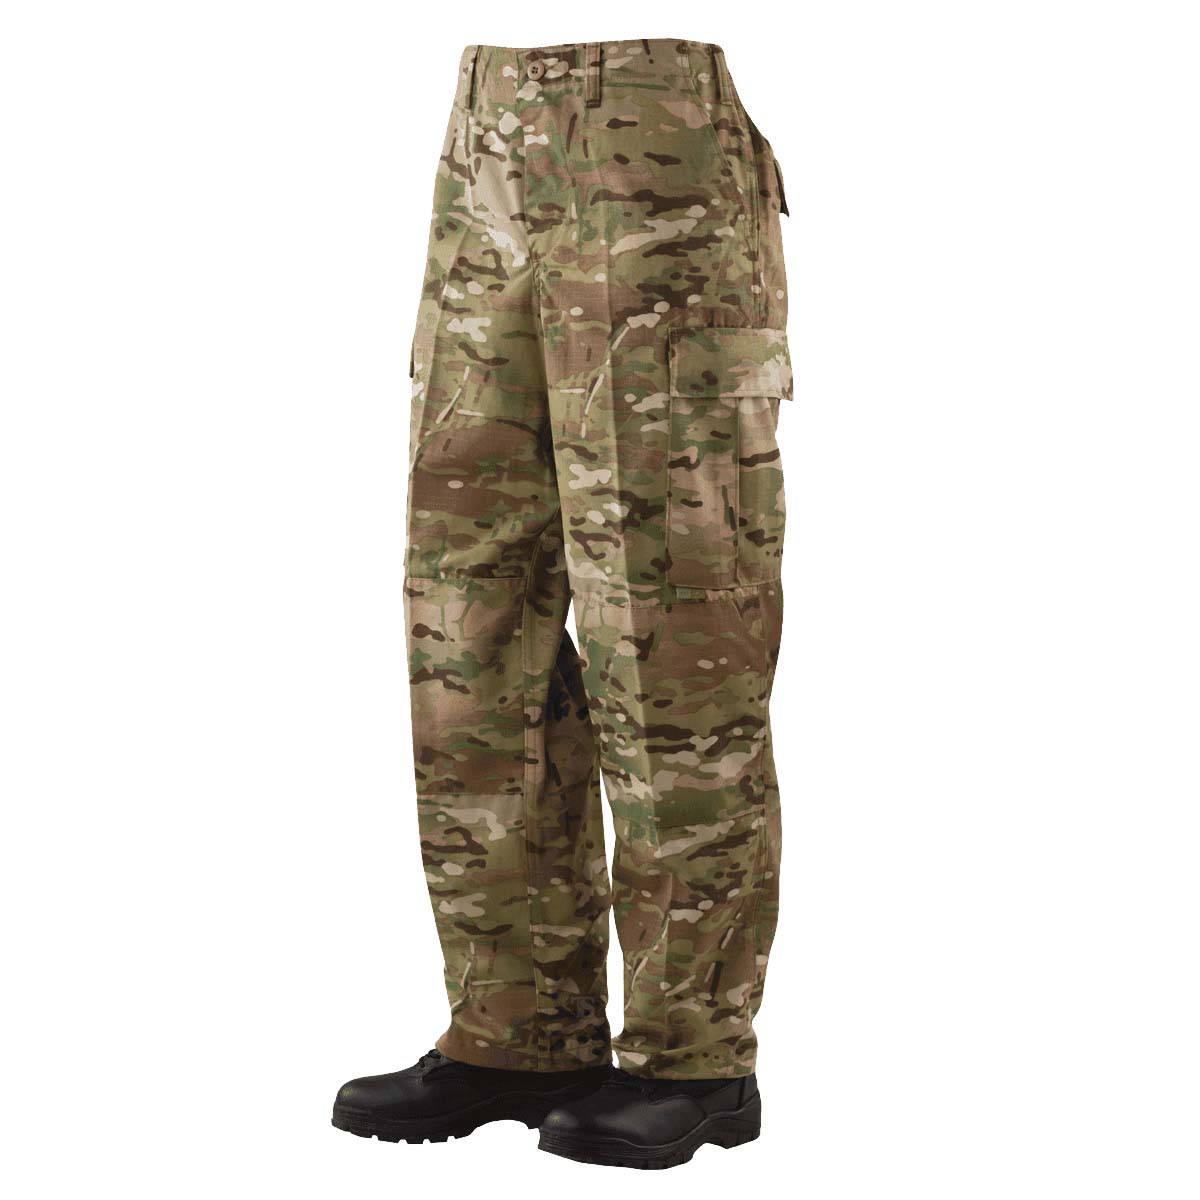 Pants - Tru-Spec BDU Camouflage Pants (50/50 Cordura Nylon Cotton Rip-Stop)